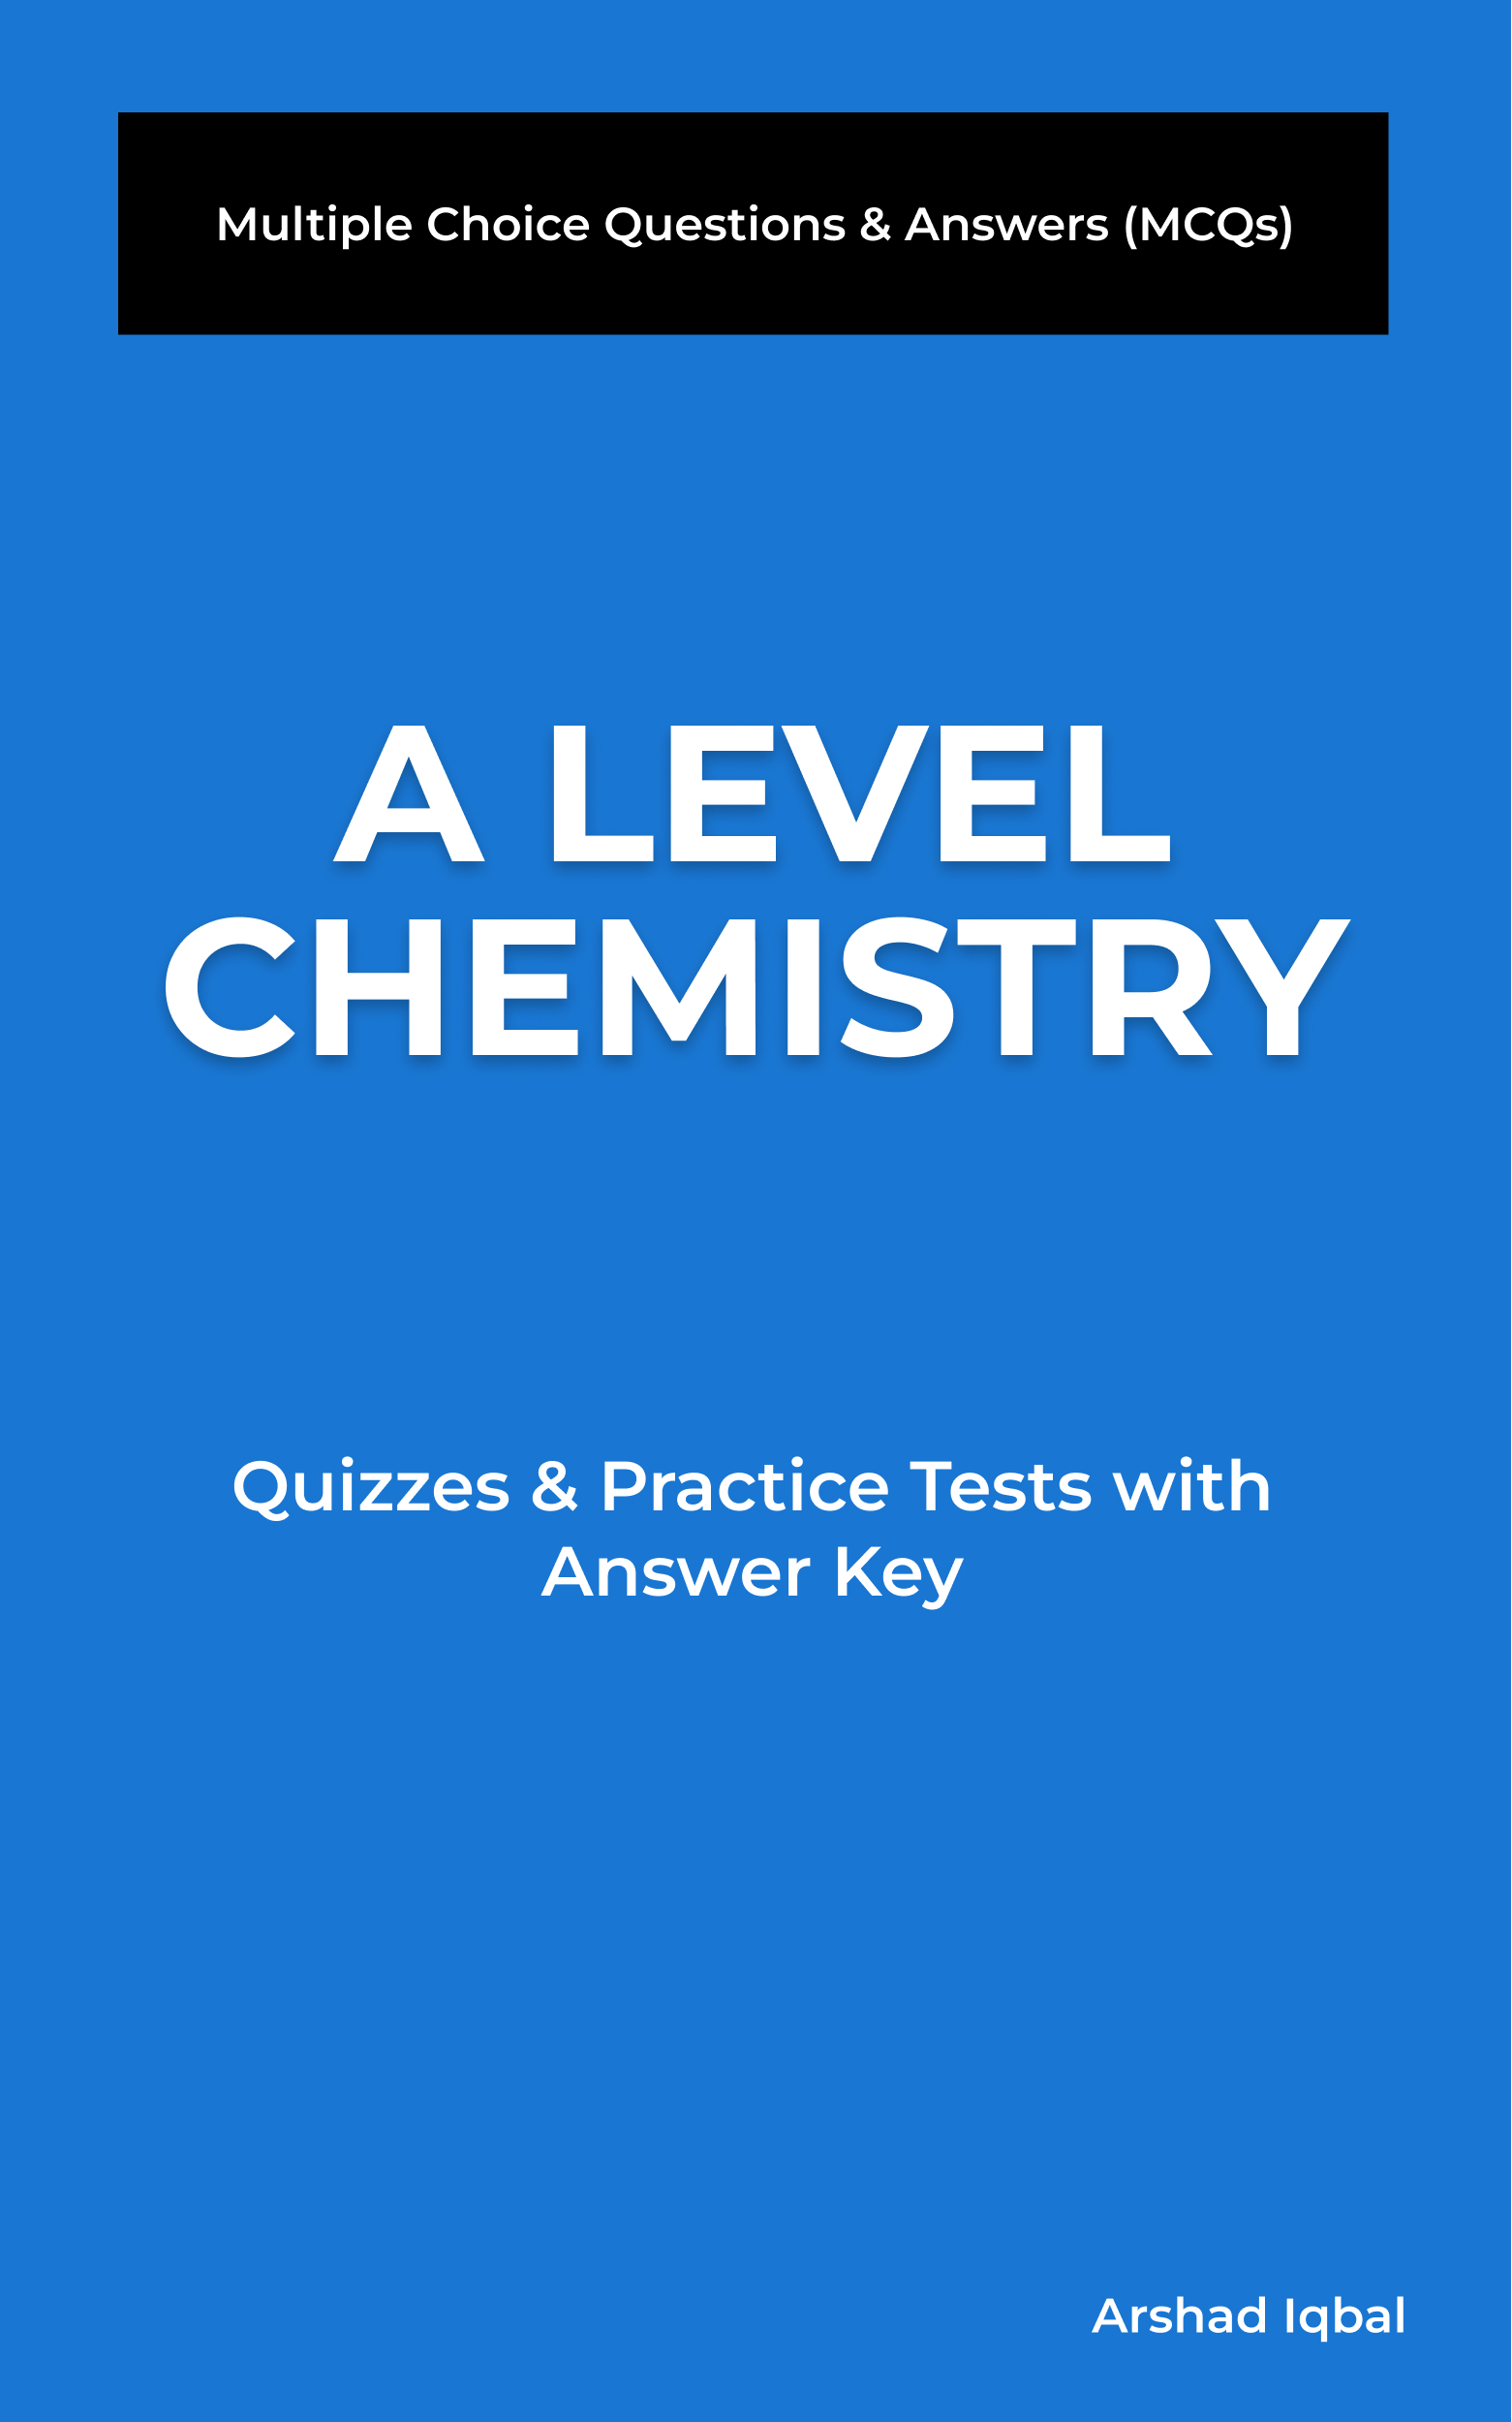 A level Chemistry Book PDF